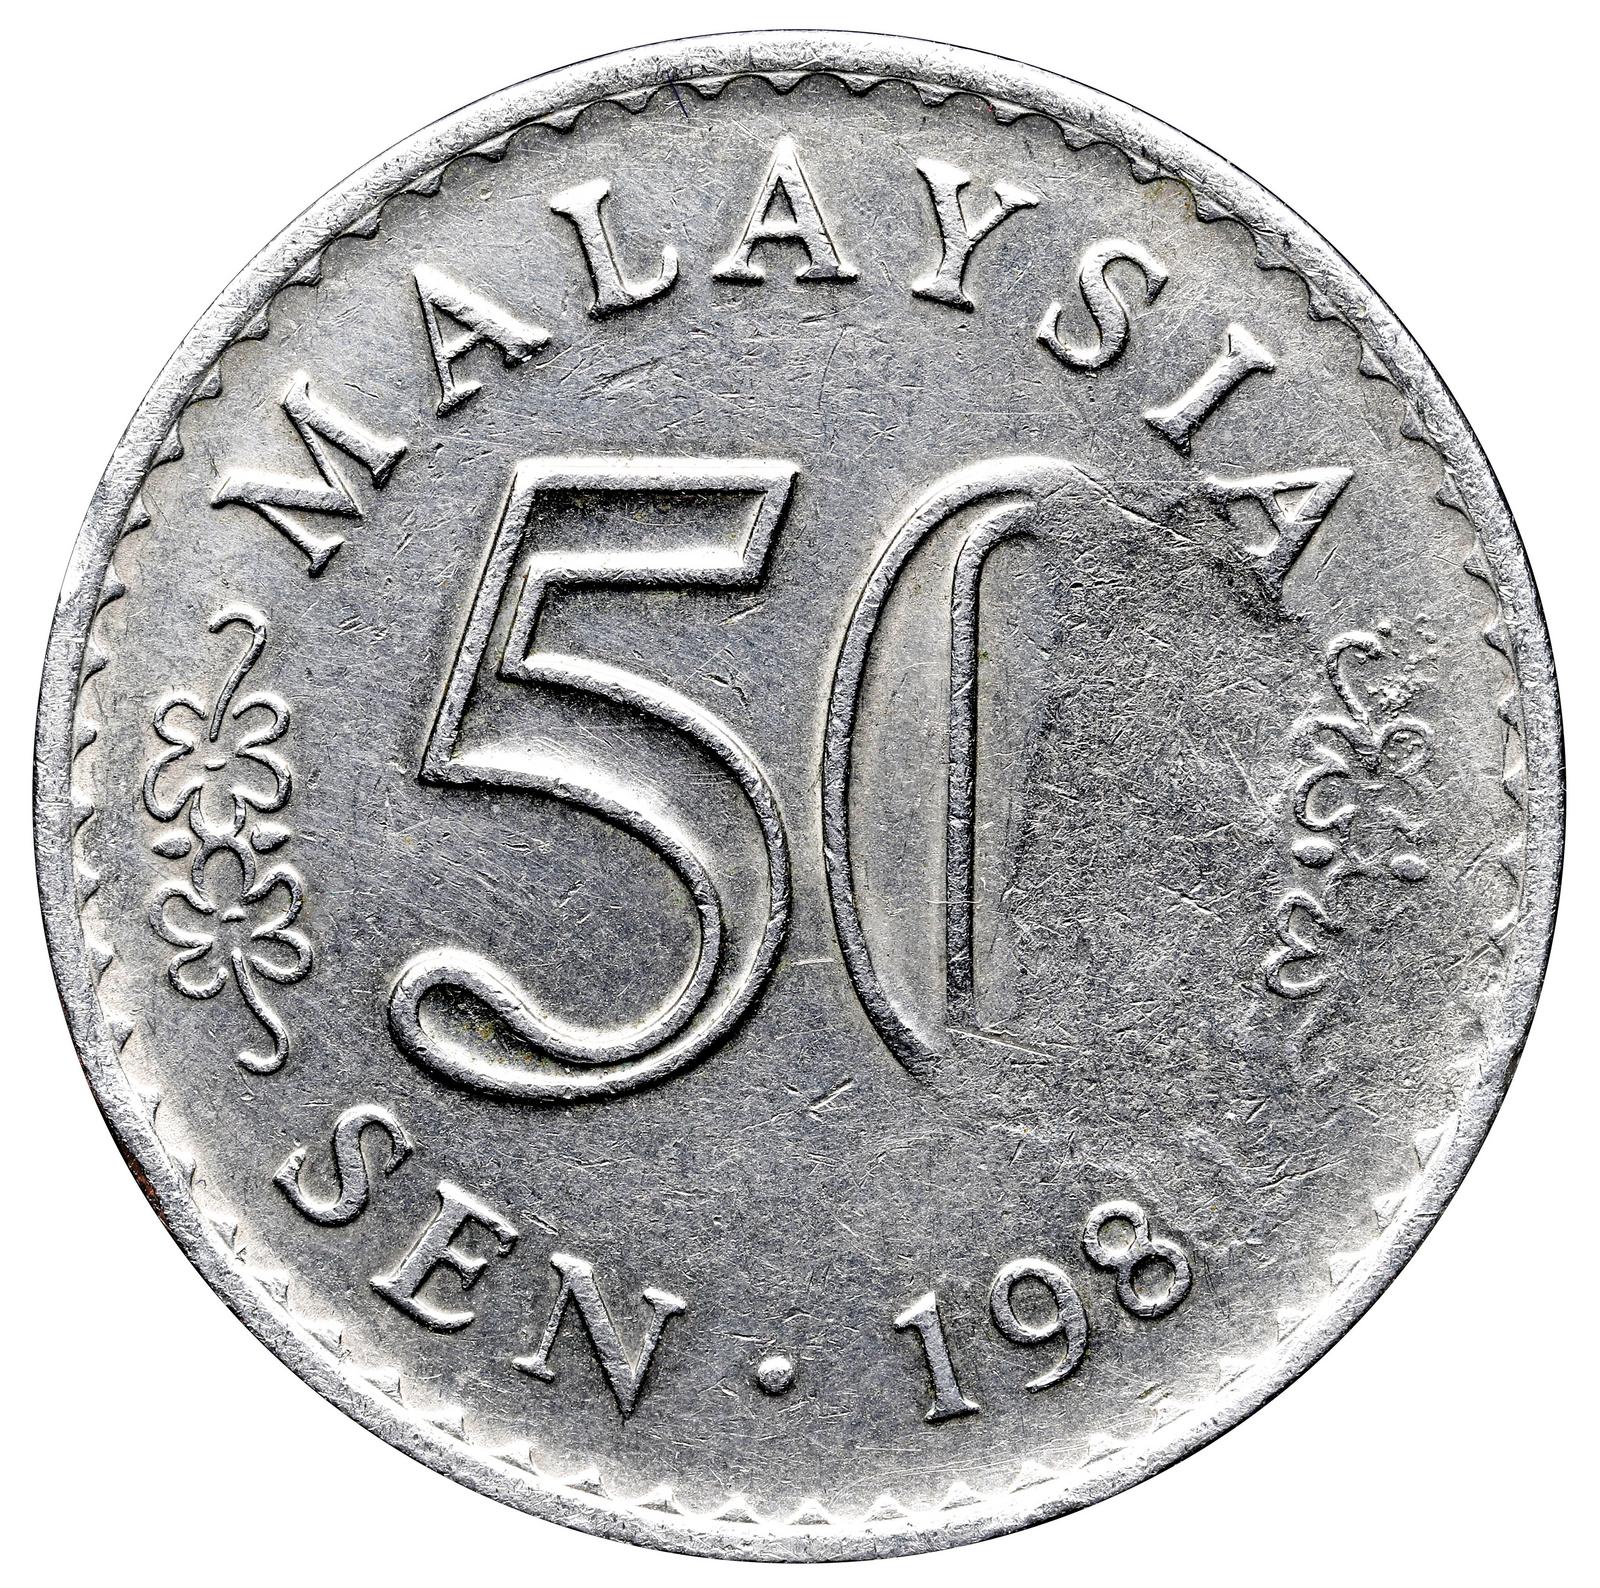 Malaysia, 50S, 1984, Mint Error - Reverse Strike Through, VF 